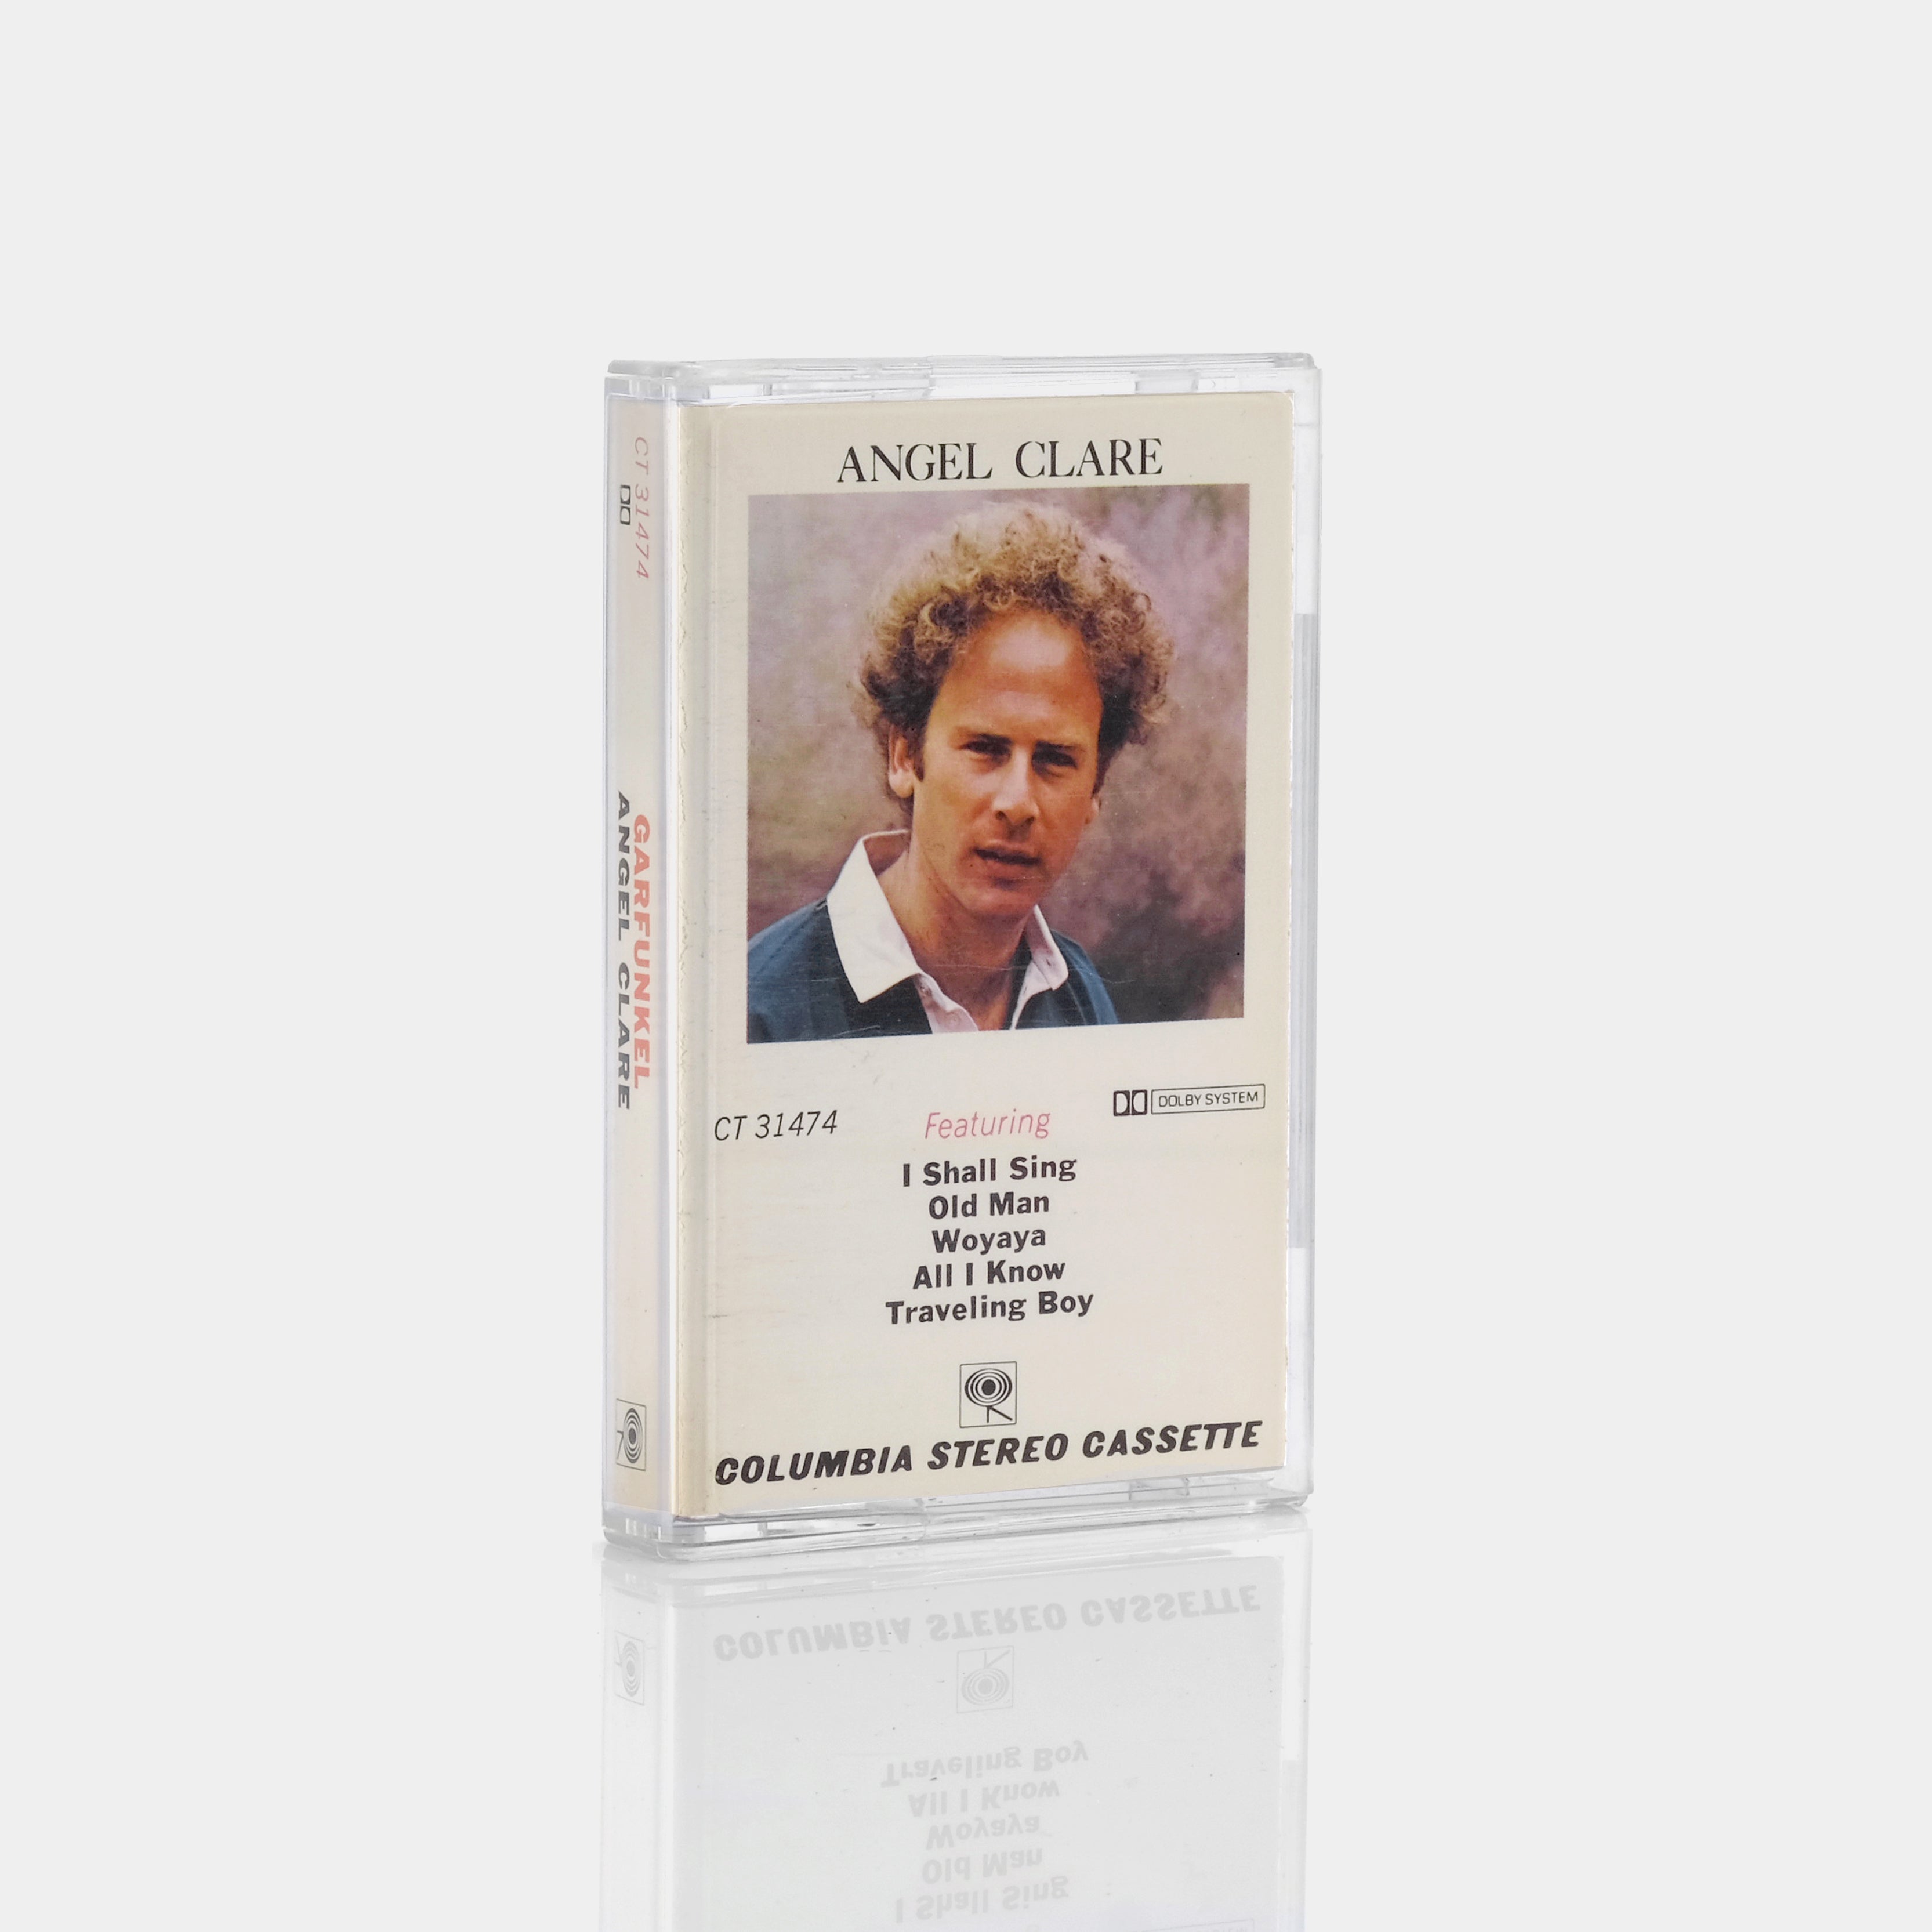 Art Garfunkel - Angel Clare Cassette Tape